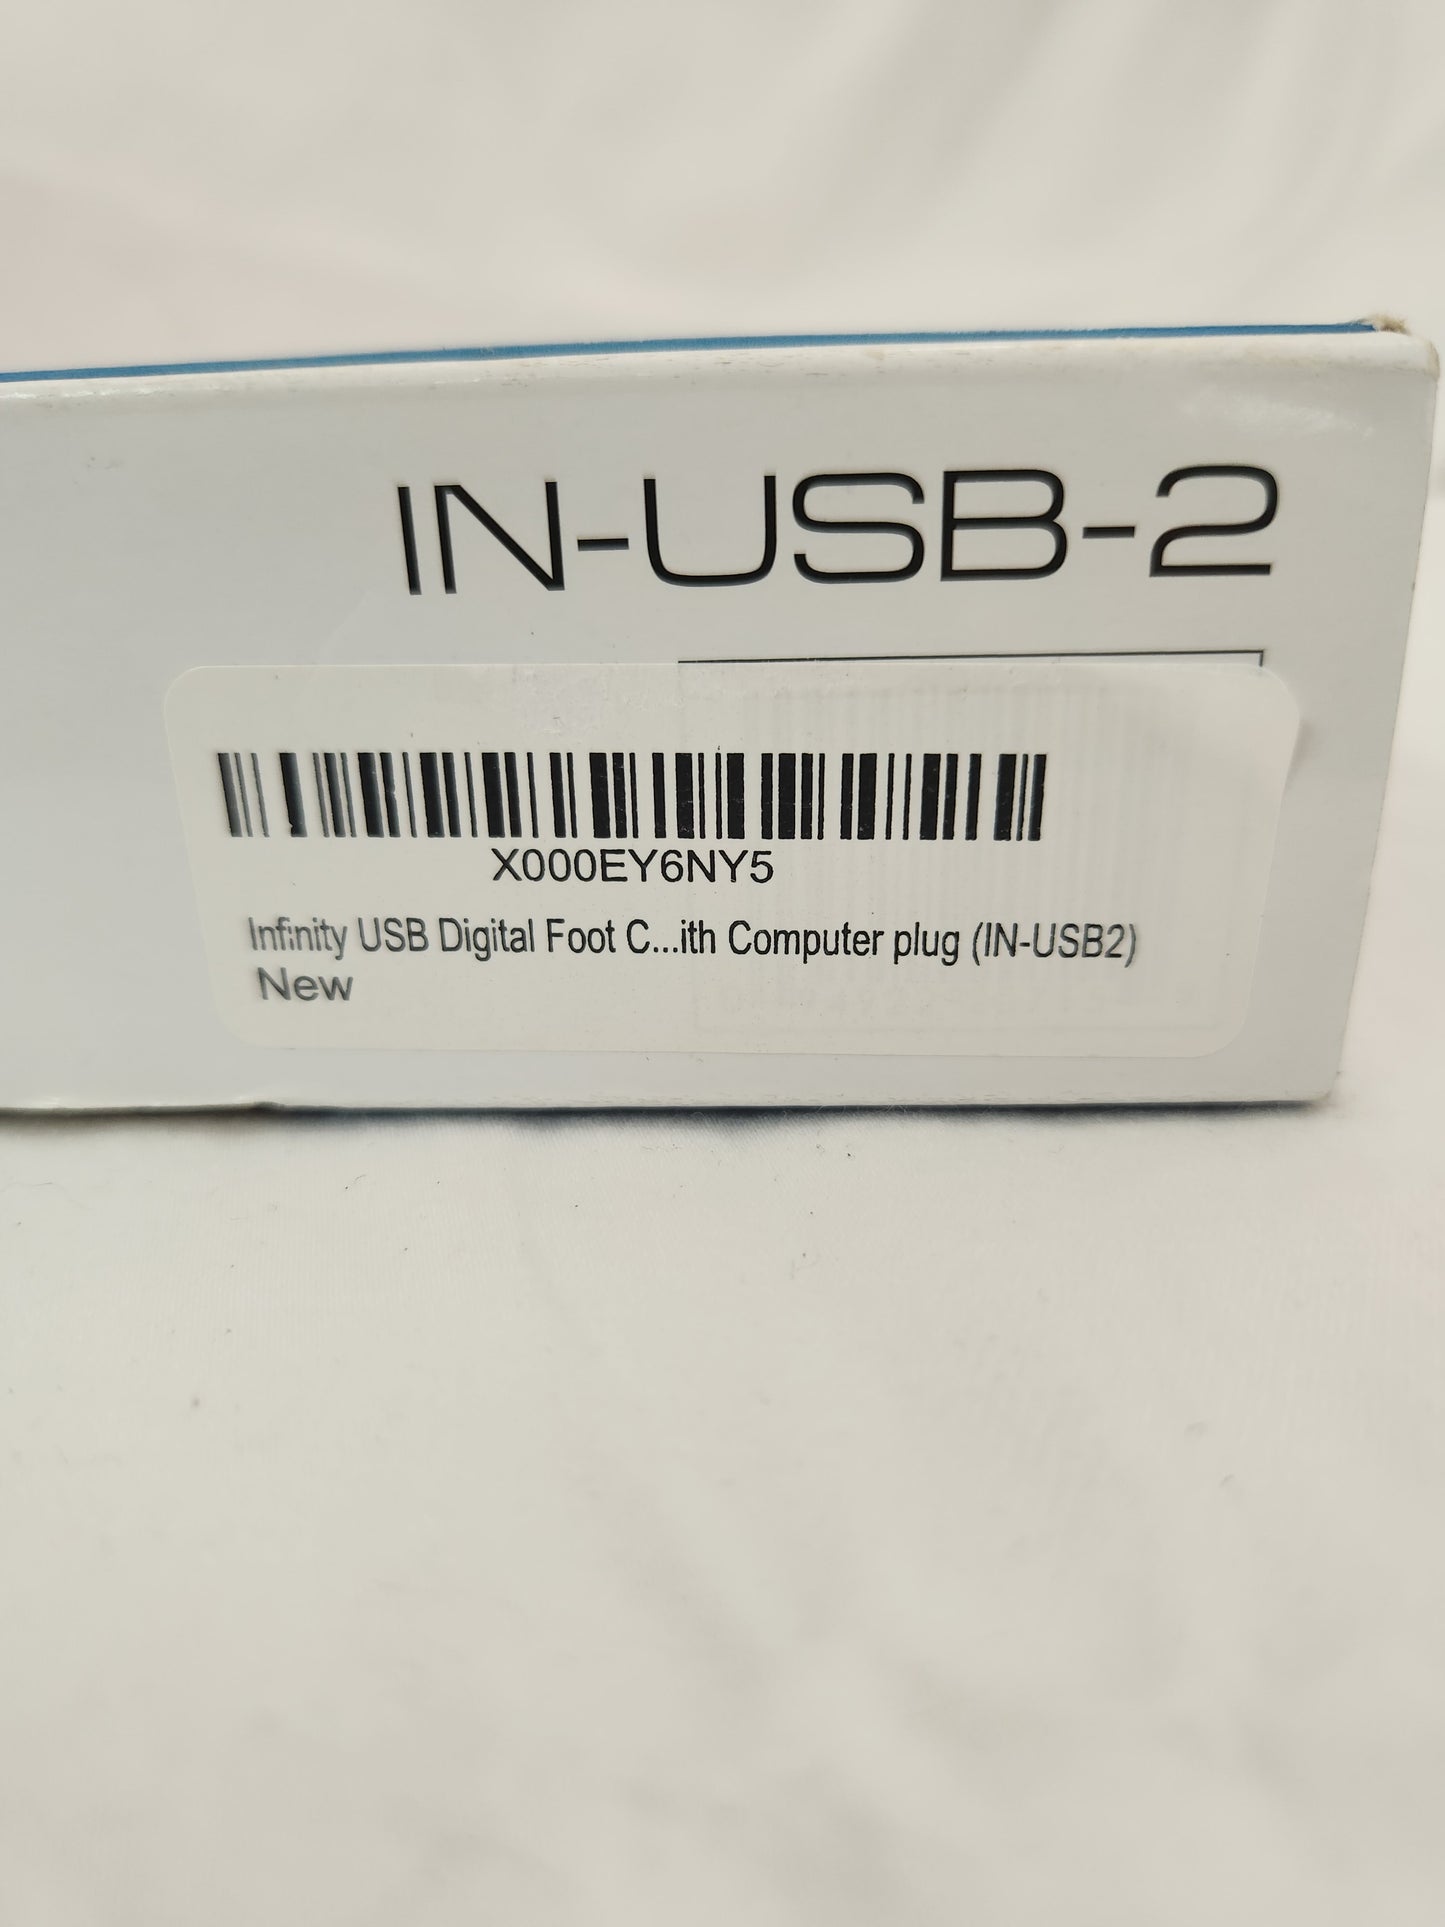 Infinity USB Digital Foot Control In-USB-2 - Tested